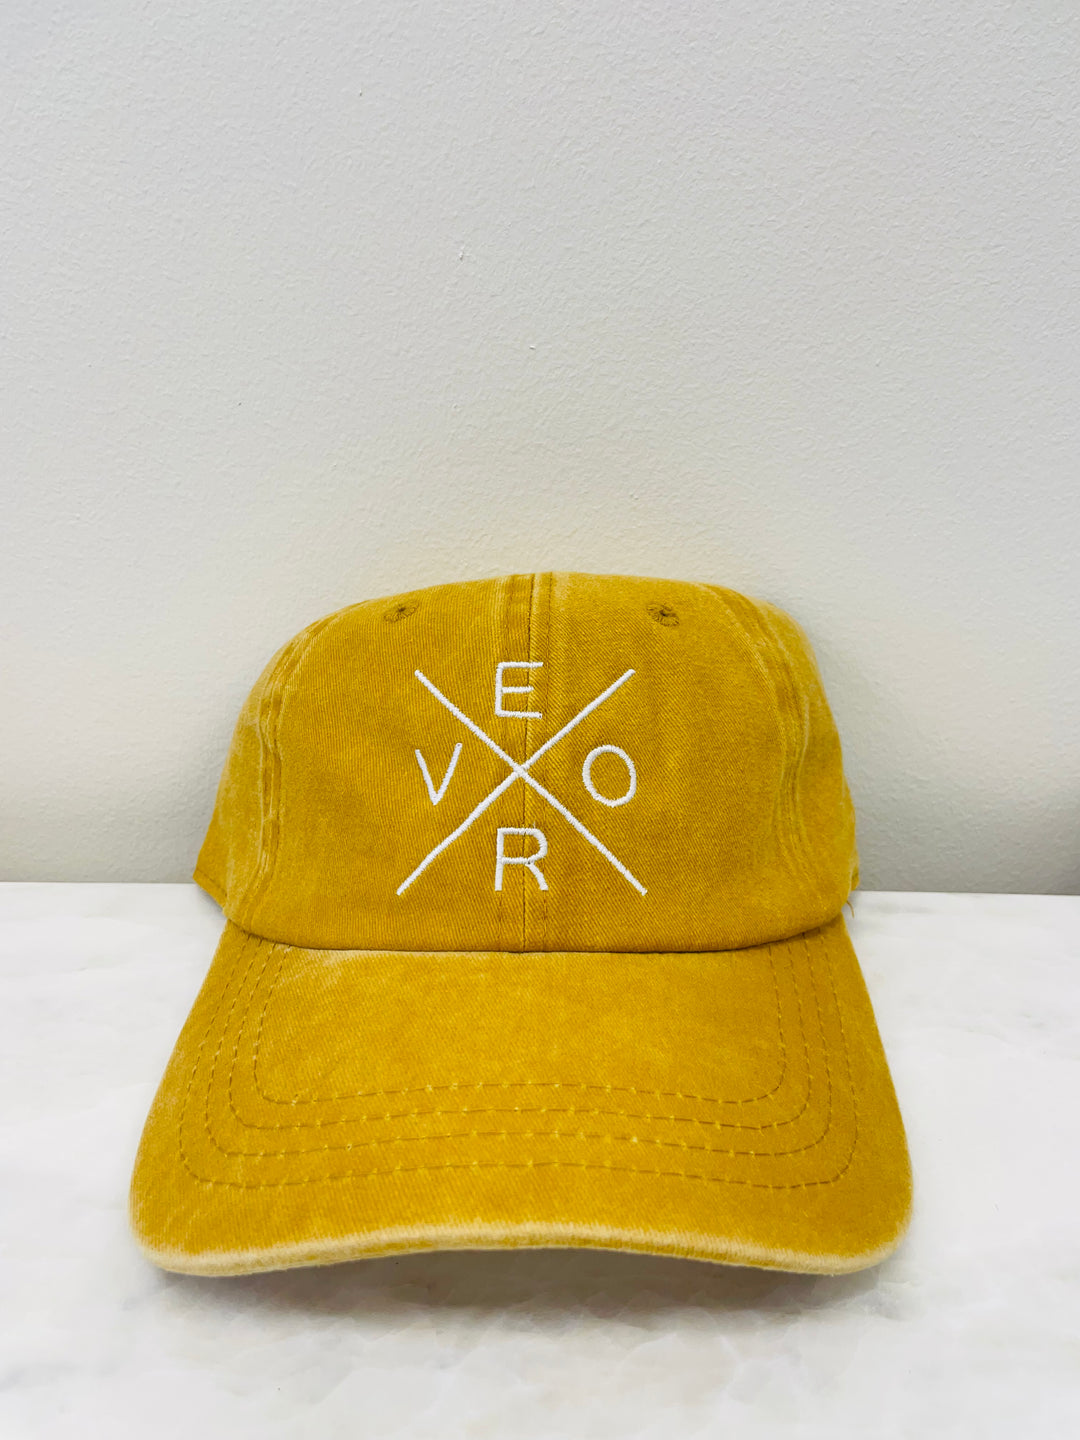 Vero Hat - Gold & White